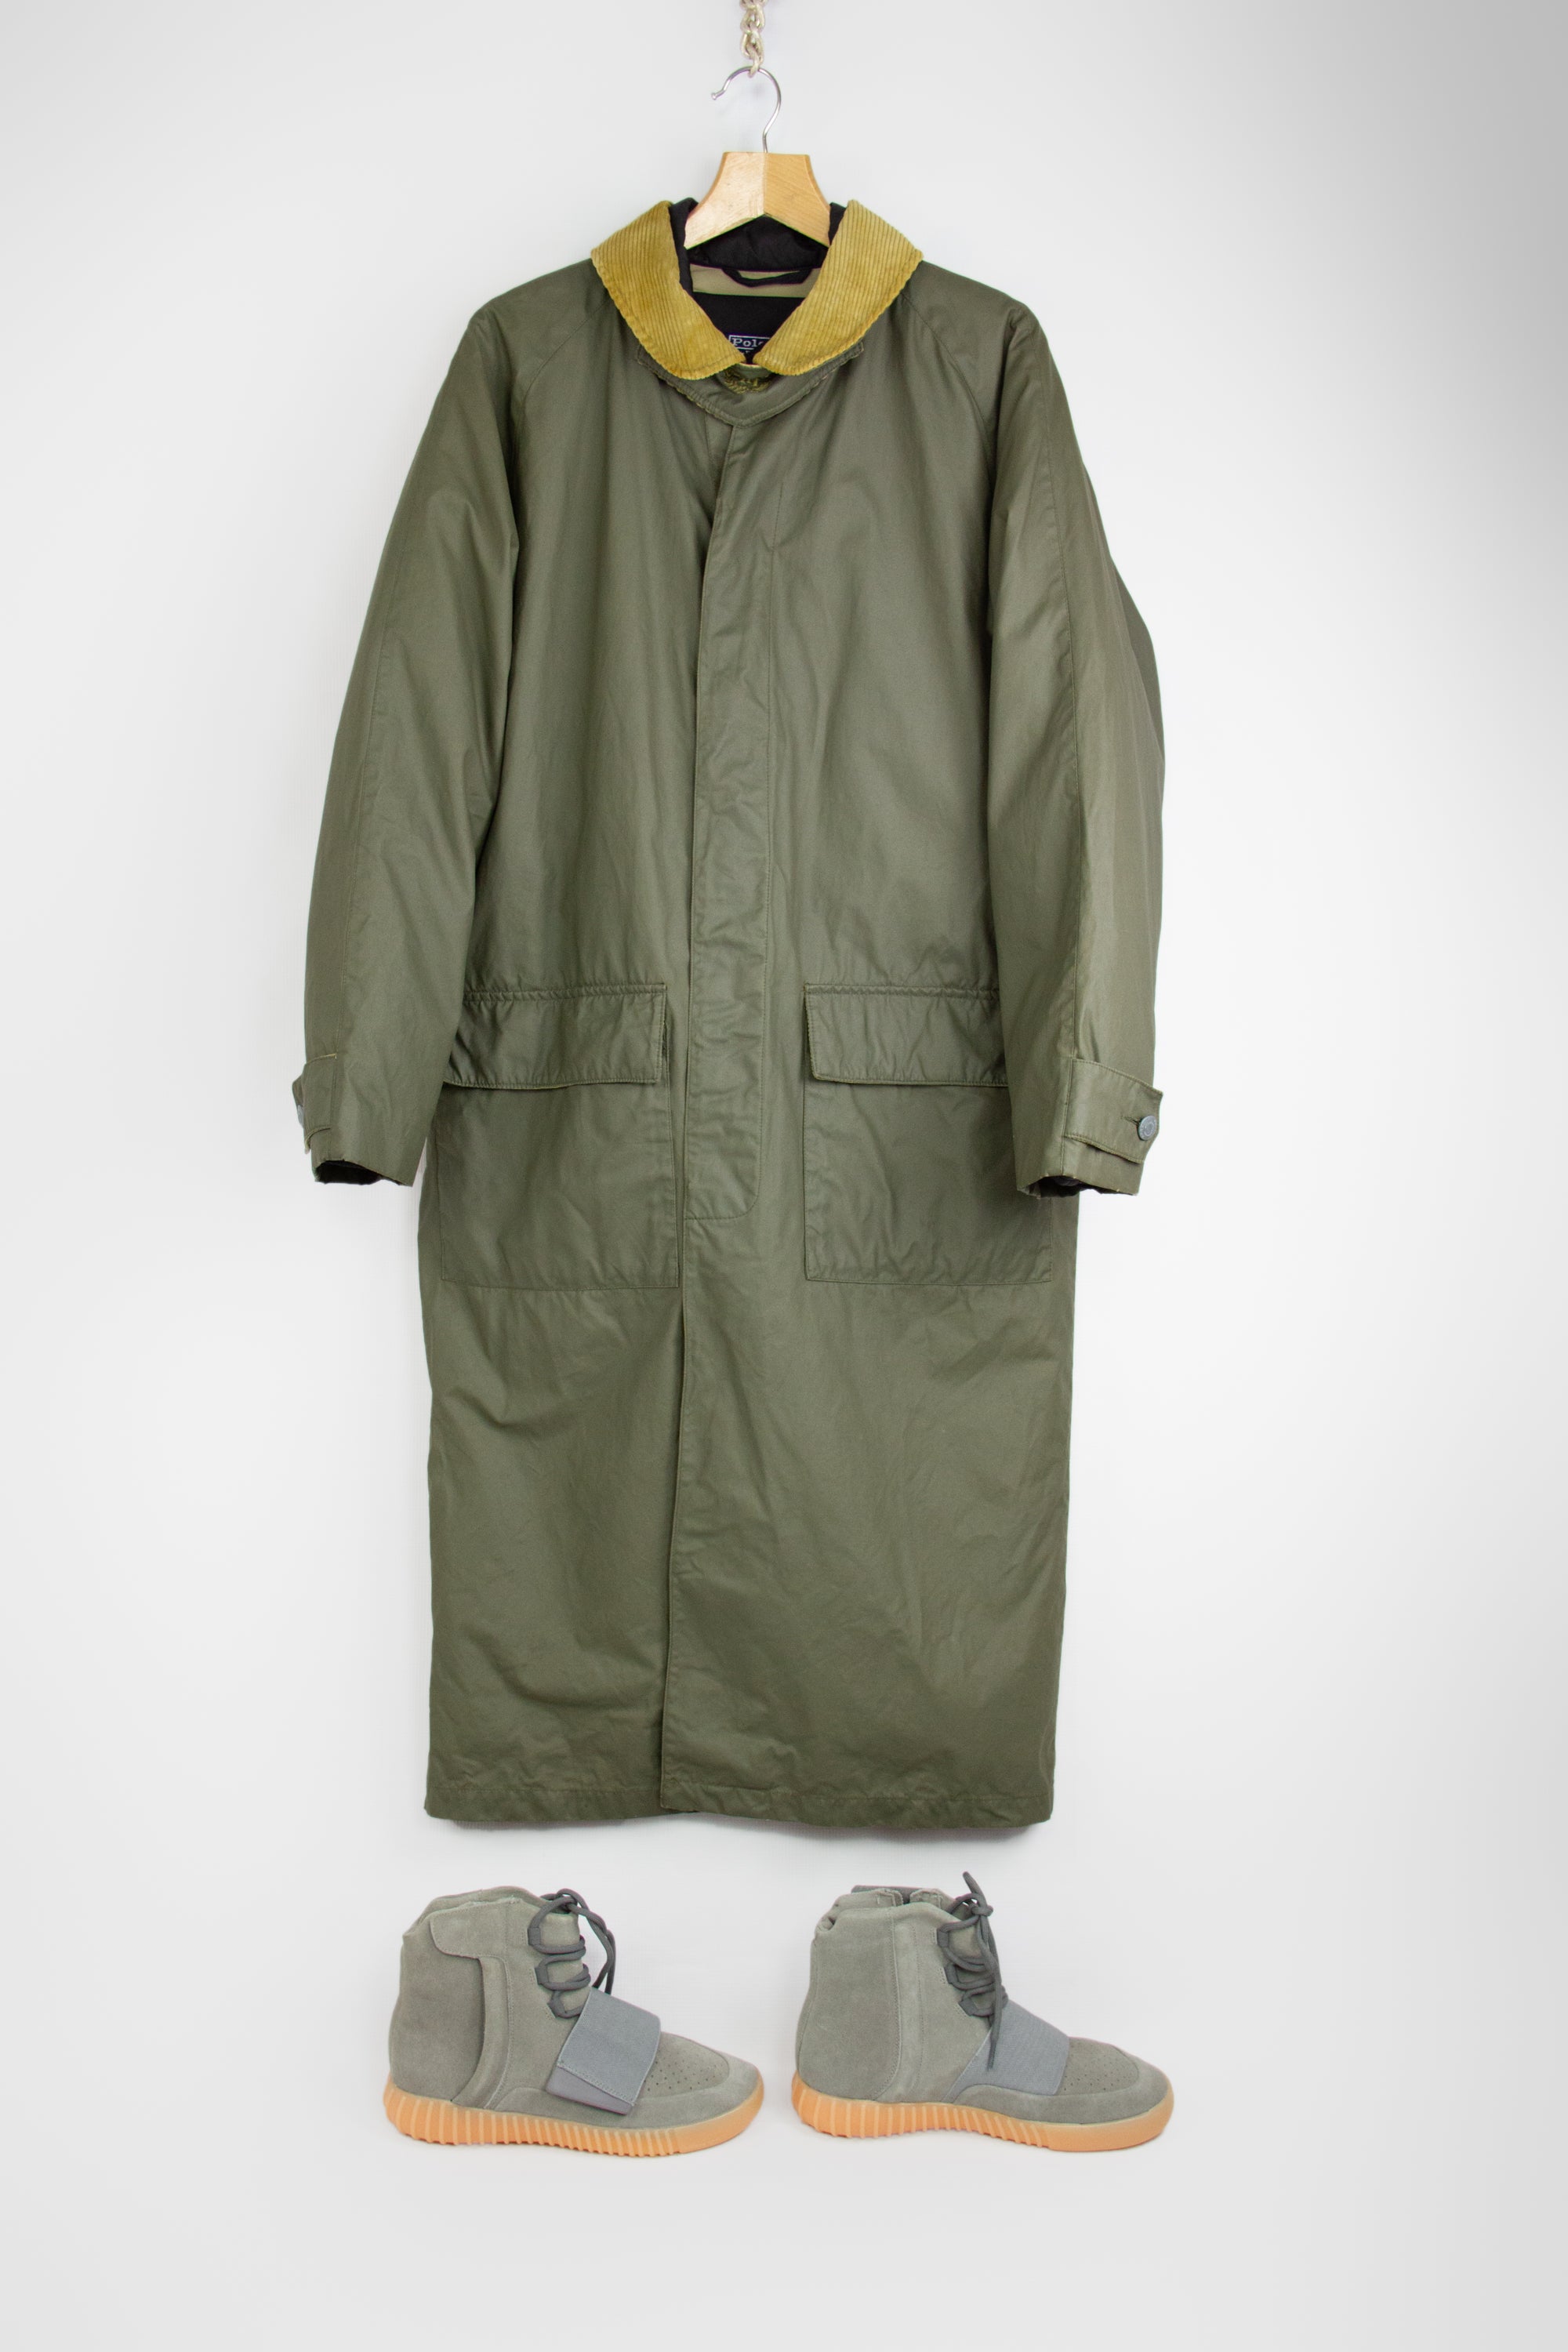 HENRI LLOYD Vintage Men's Long Rain Coat, L - secondfirst